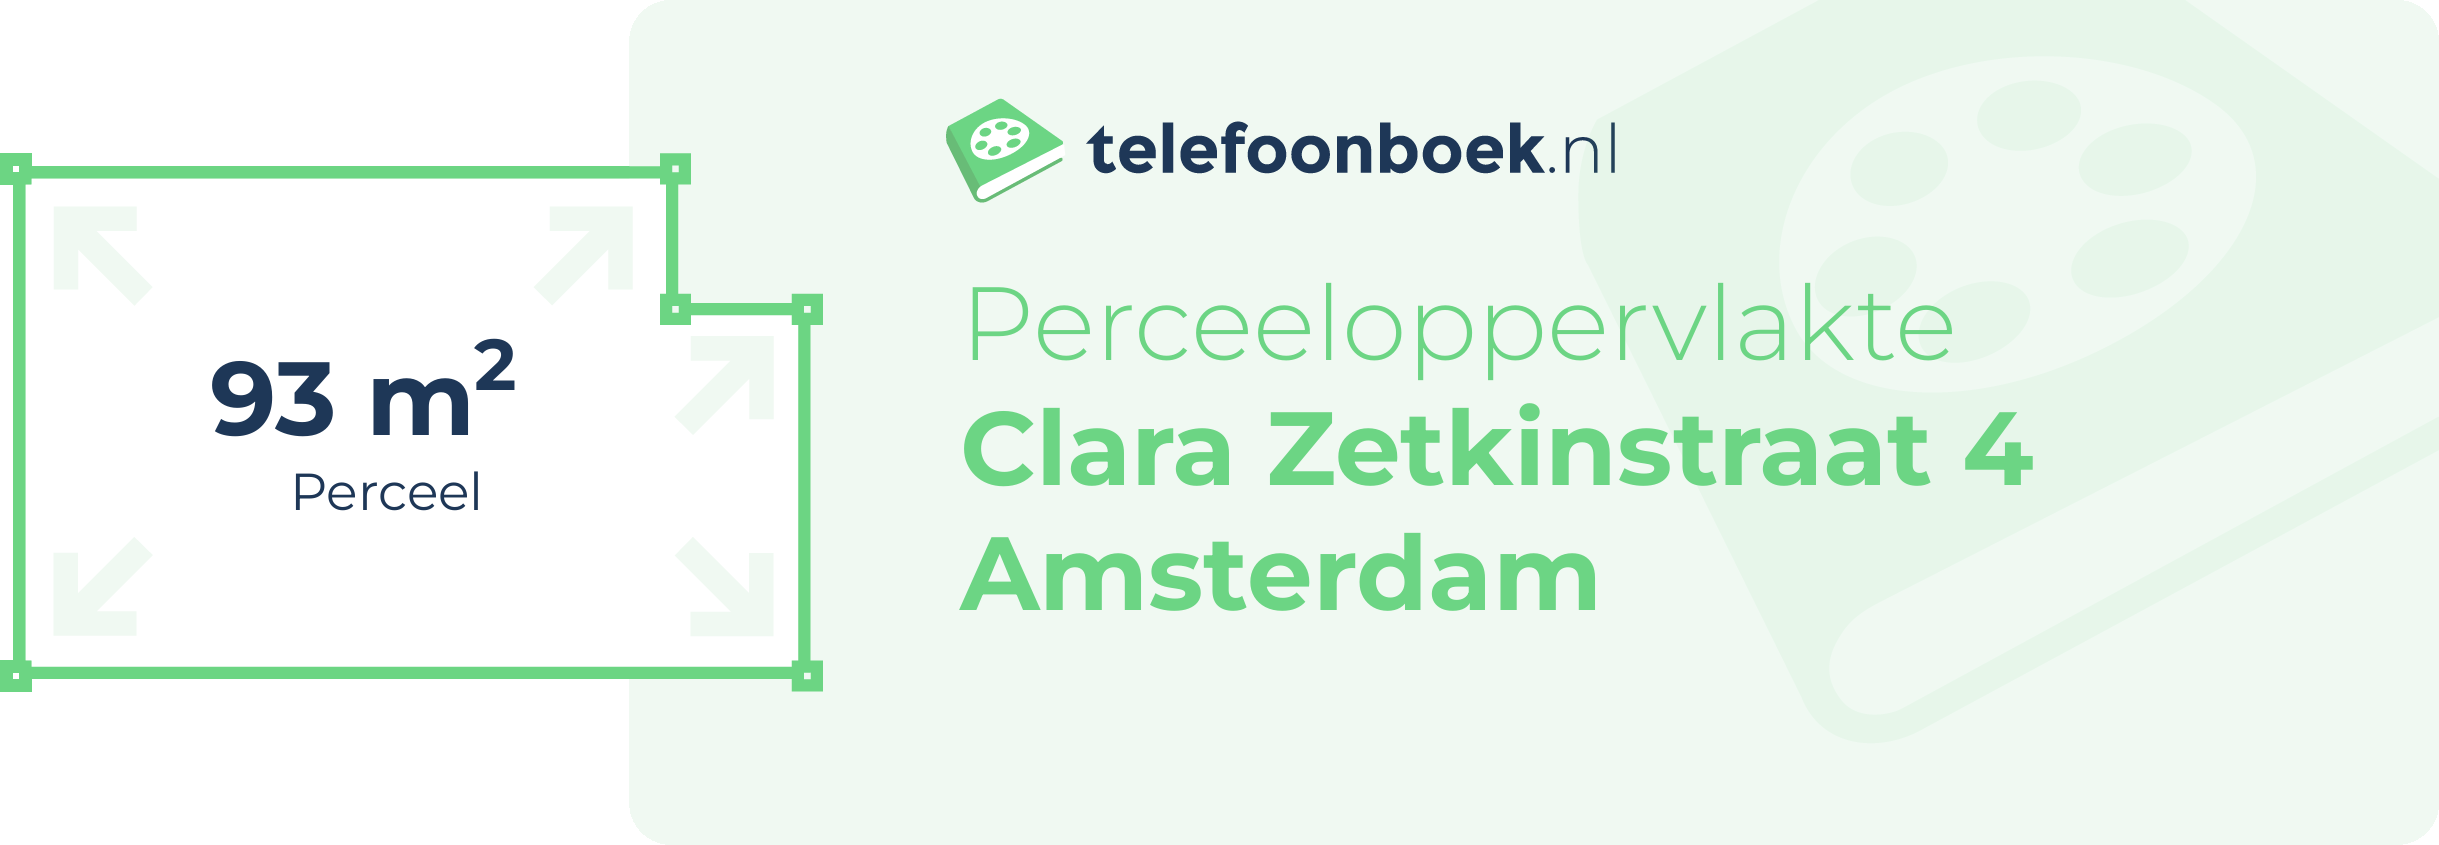 Perceeloppervlakte Clara Zetkinstraat 4 Amsterdam